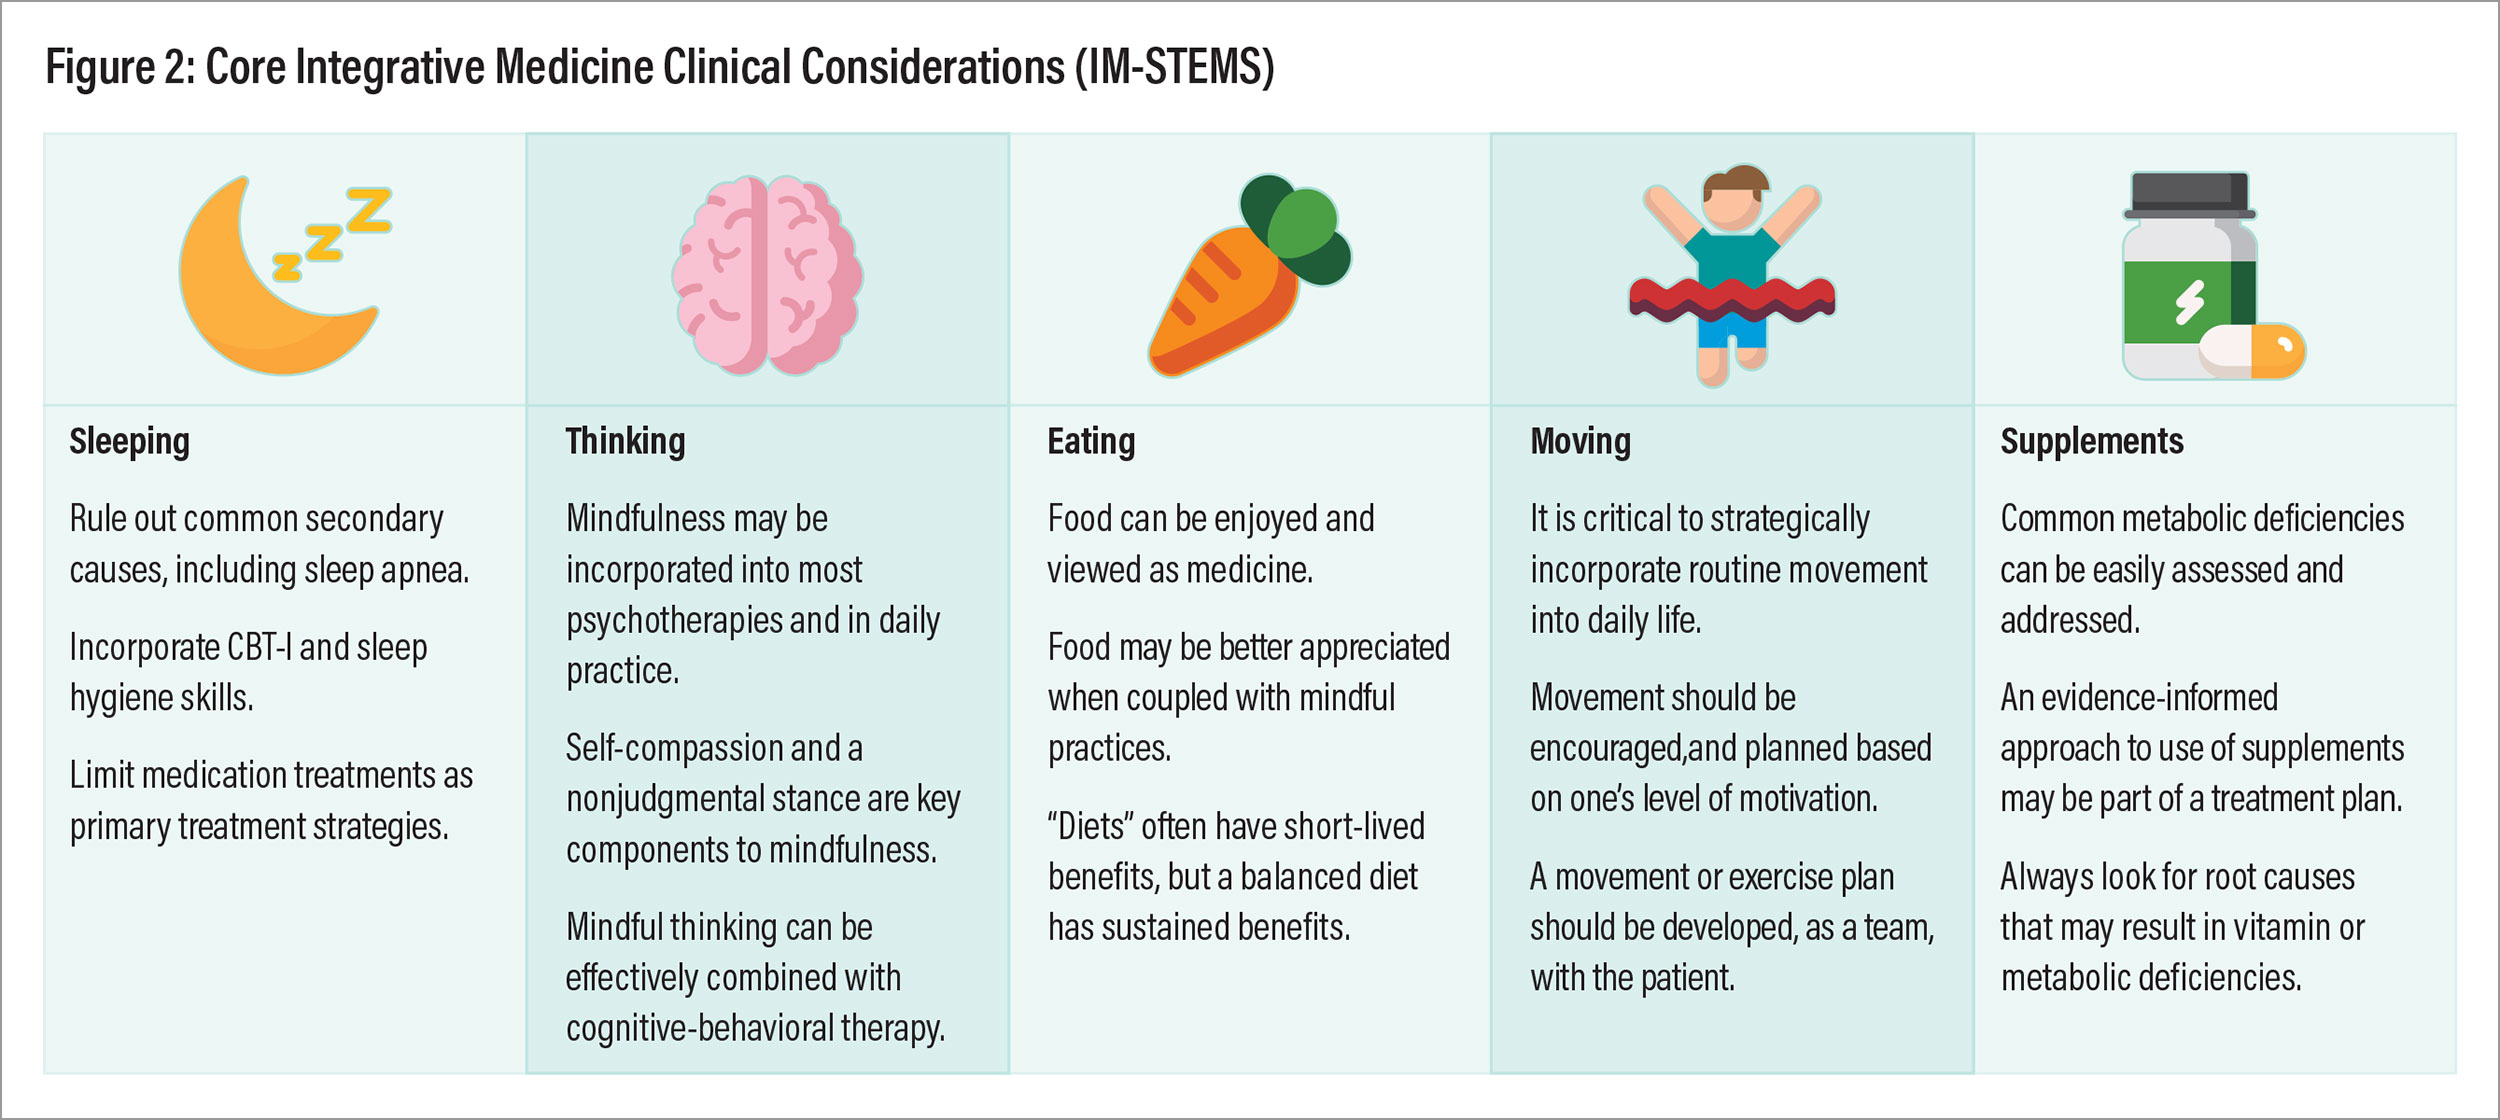 Figure 2: Core Integrative Medicine Clinical Considerations (IM-STEMS)